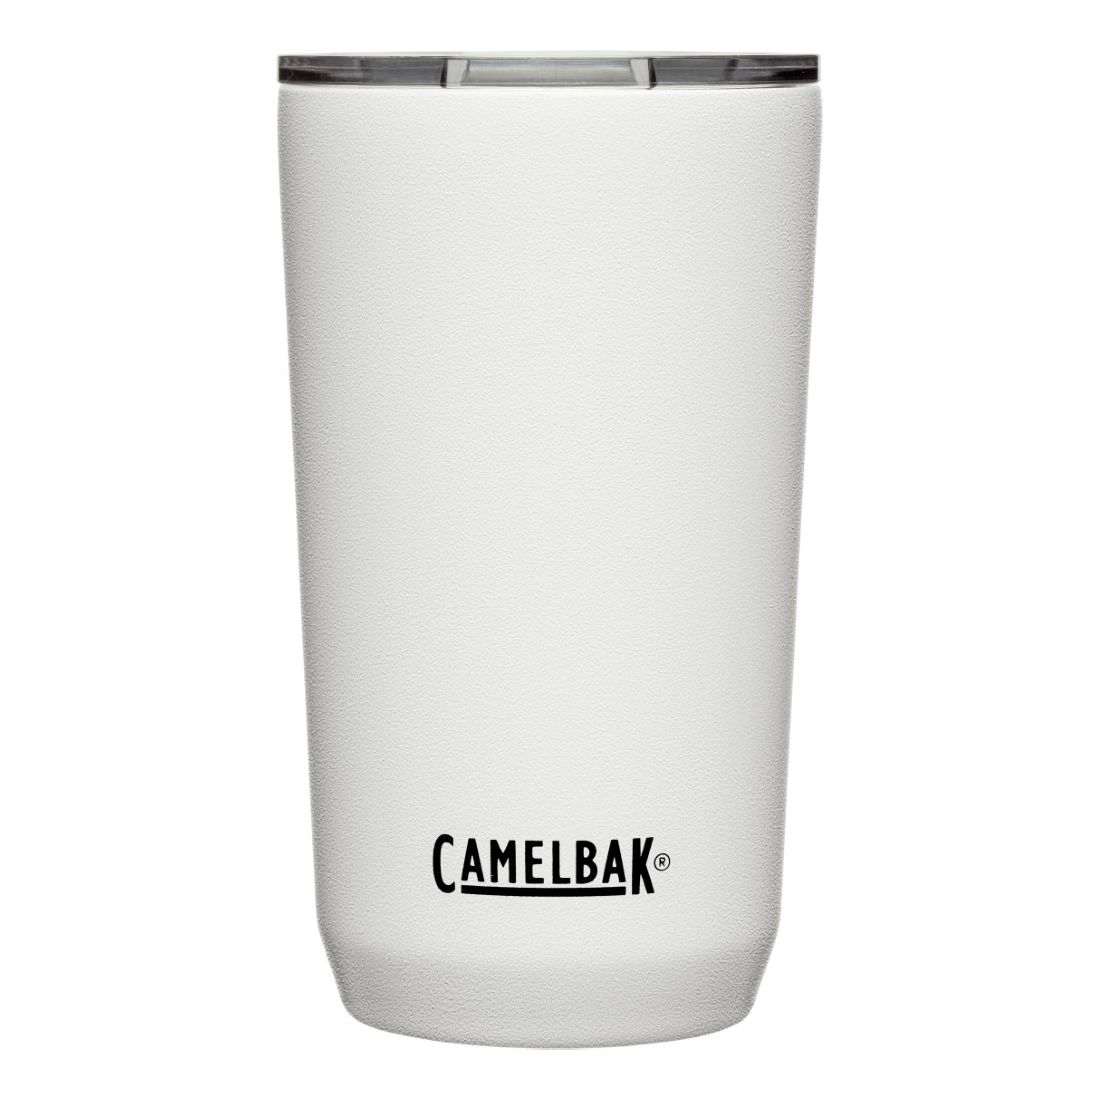 Camelbak Tumbler Stainless Steel Vacuum Insulated 16Oz White